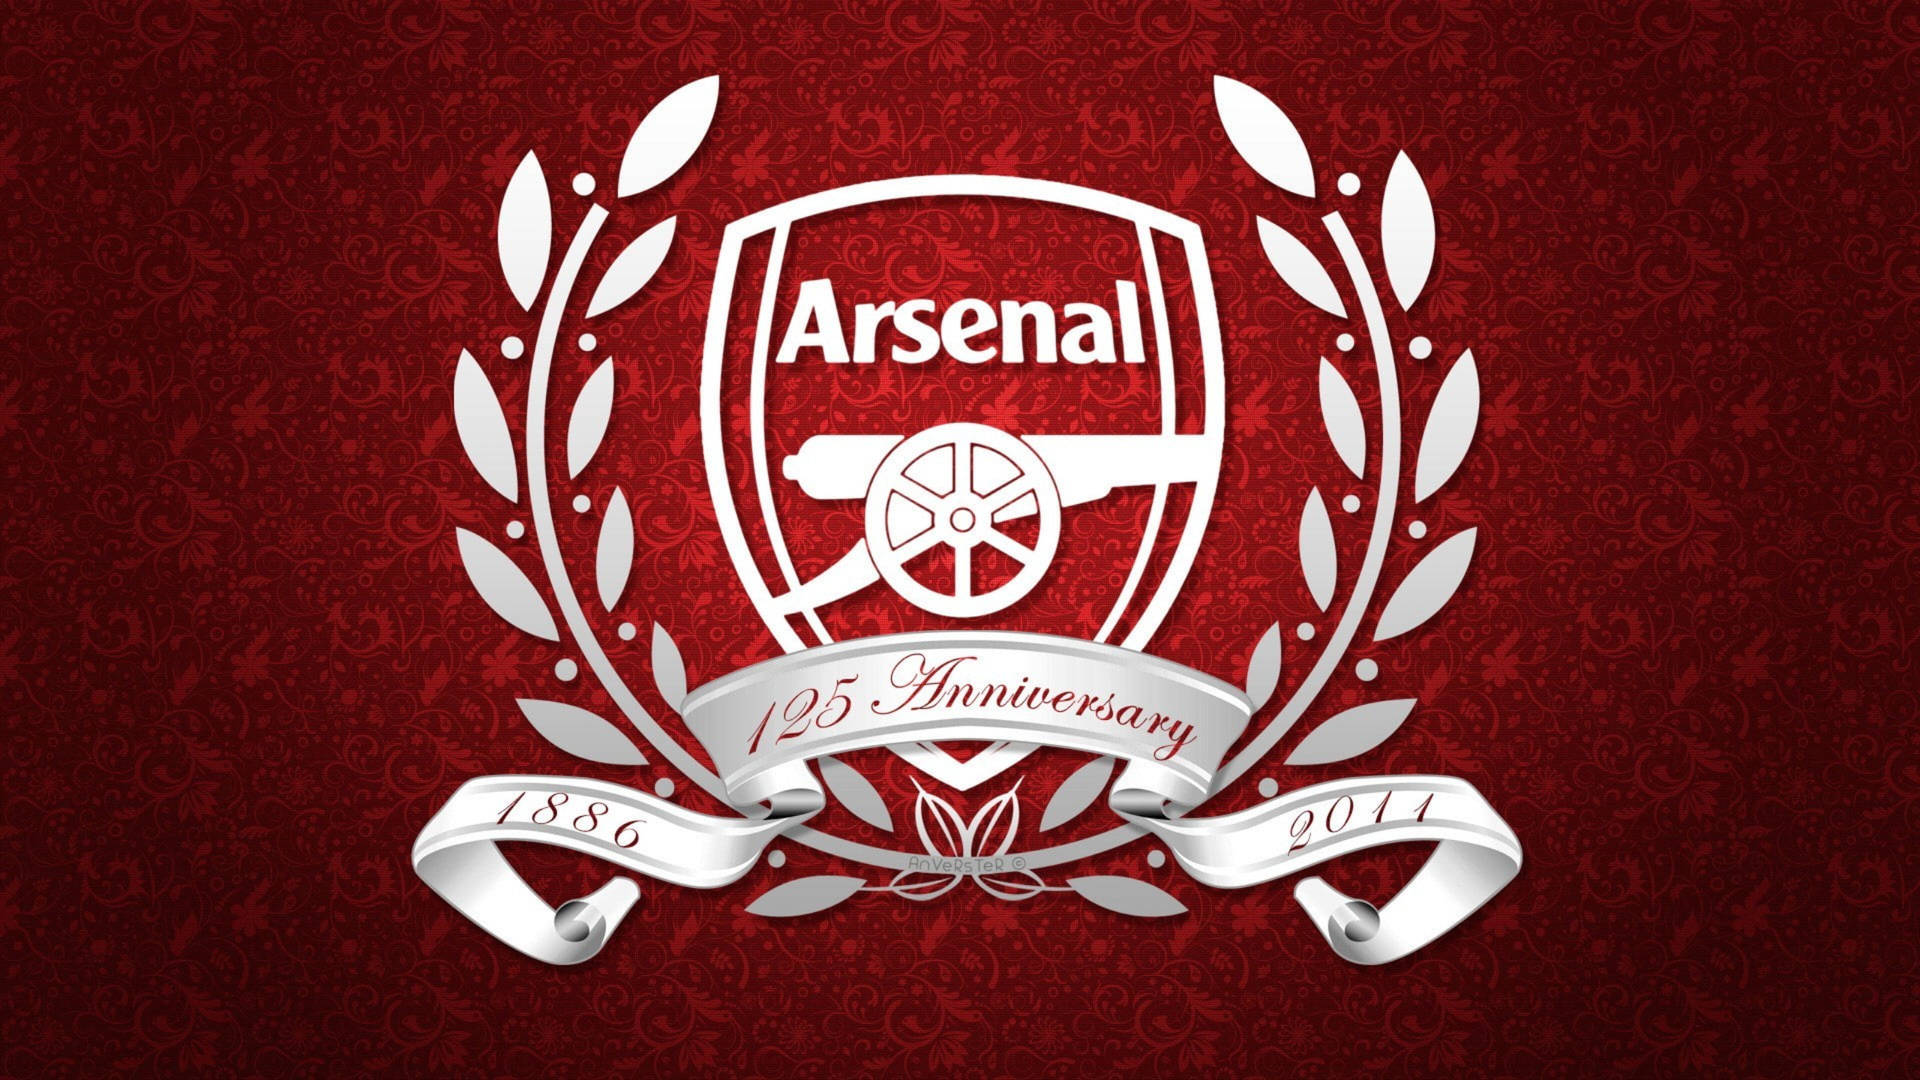 Arsenal 125 Anniversary Background